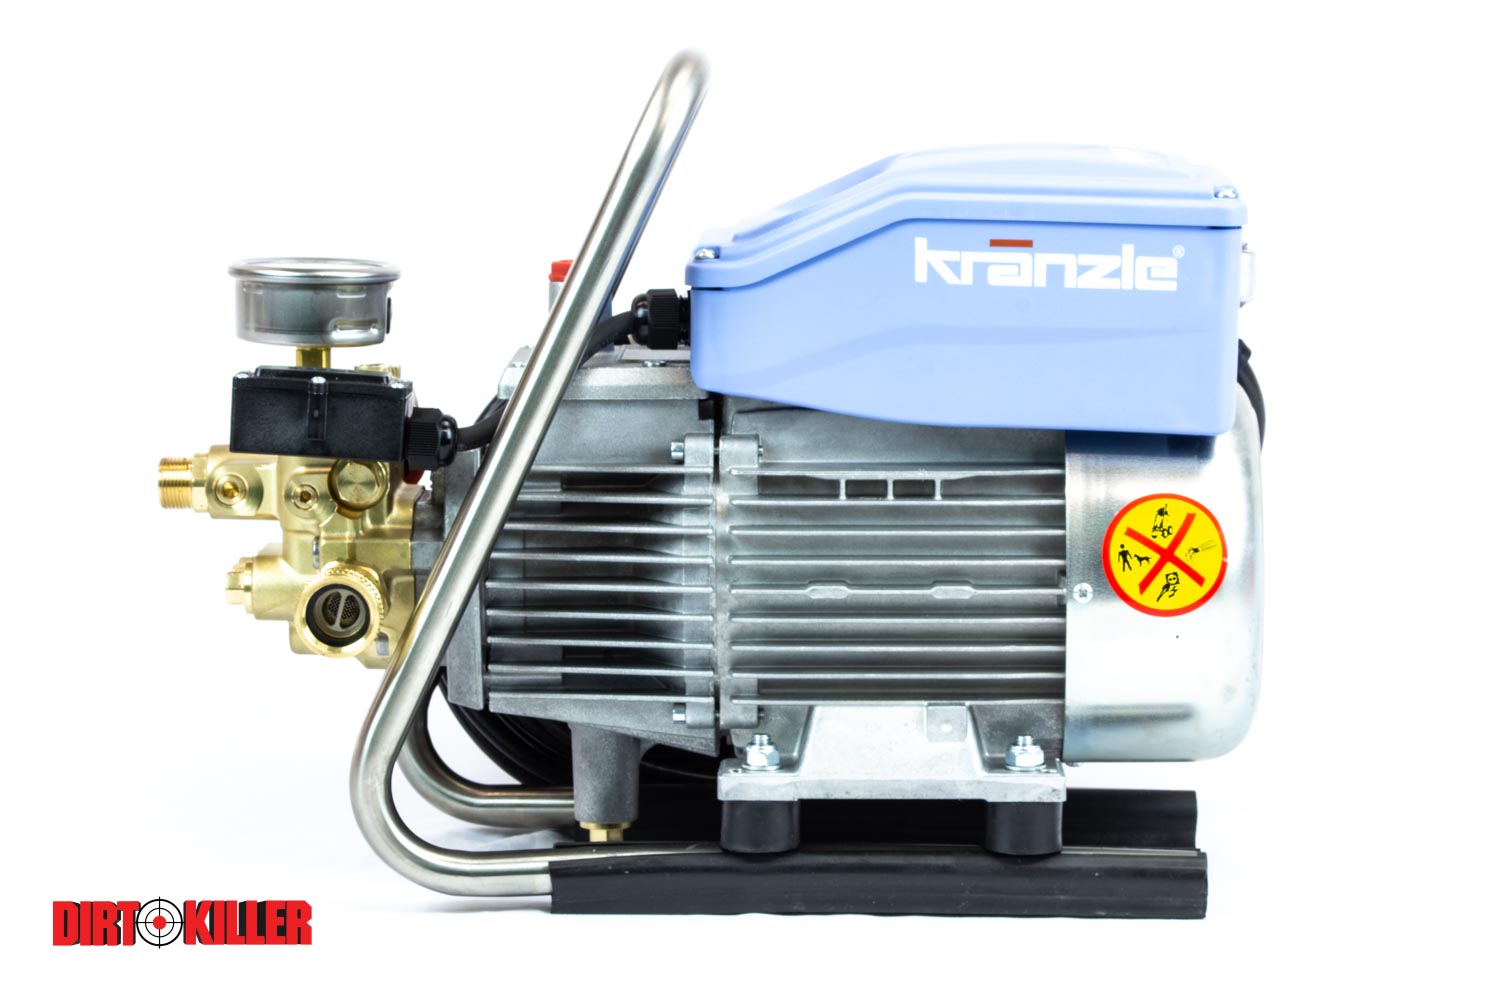 Kränzle K1622TS 1600 PSI 1.7 GPM Electric Pressure Washer-image_1.7 GPM Electric Pressure Washer-image_1